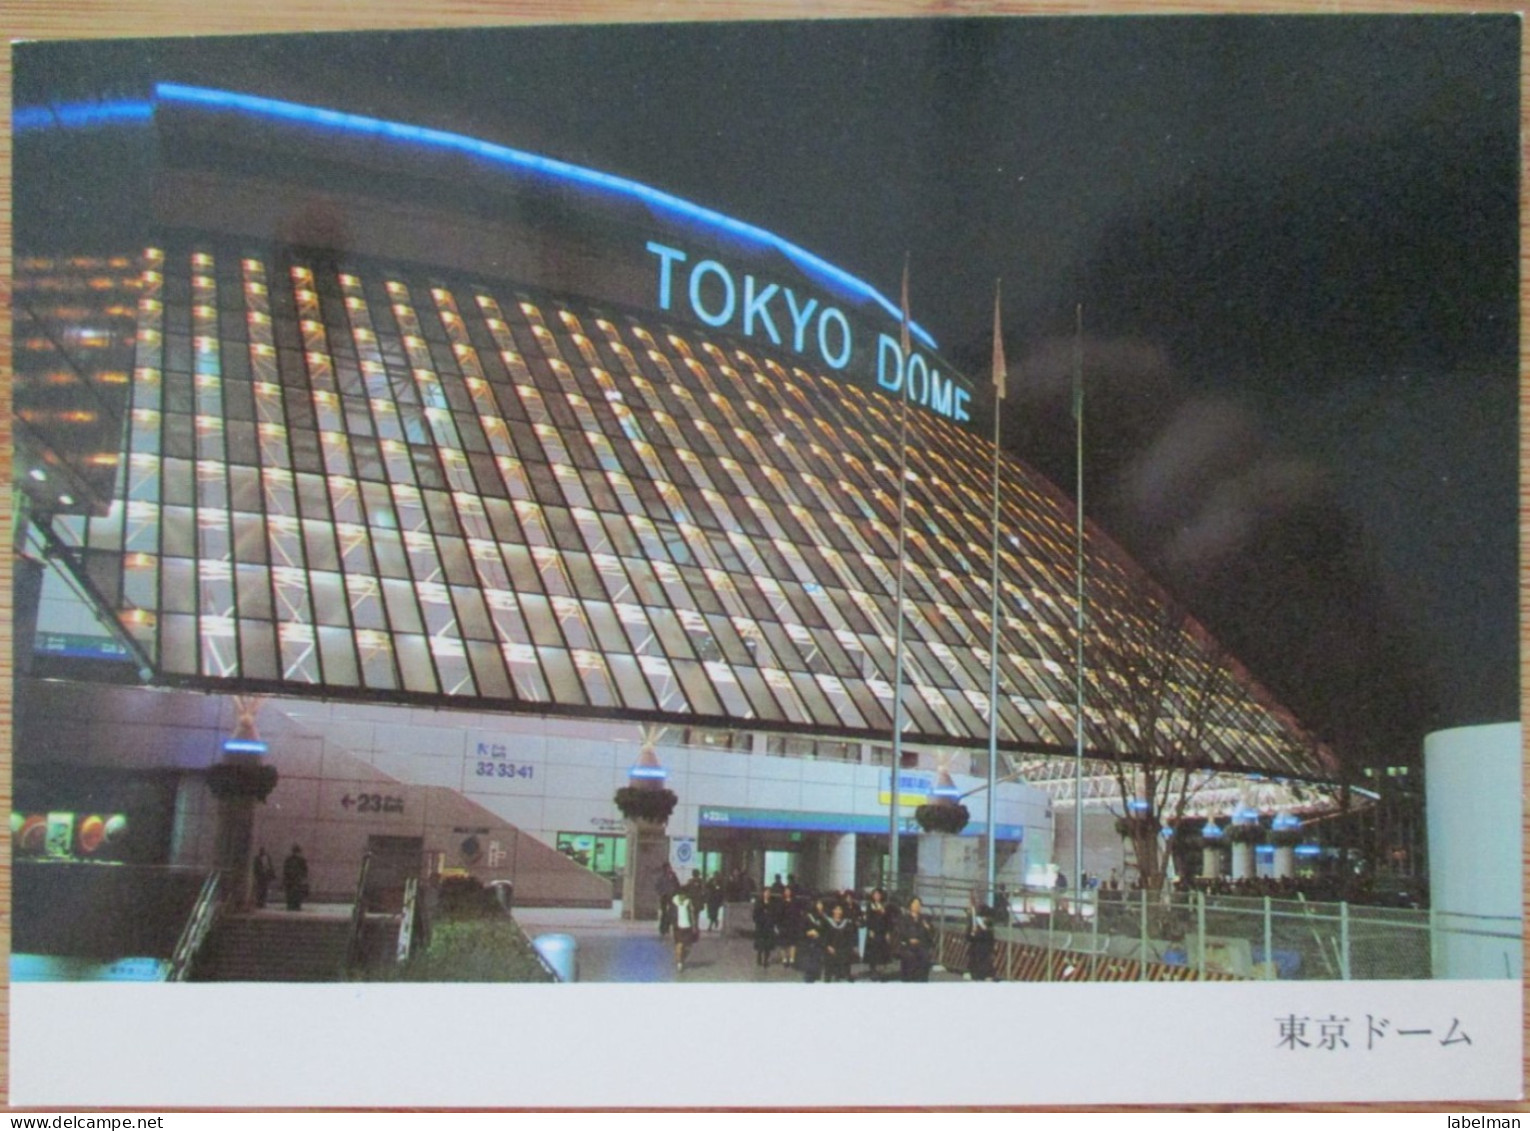 JAPAN TOKYO DOME SPORTS STADIUM POSTCARD ANSICHTSKARTE PICTURE CARTOLINA PHOTO CARD POSTKARTE CARTE POSTALE KARTE - Tokio